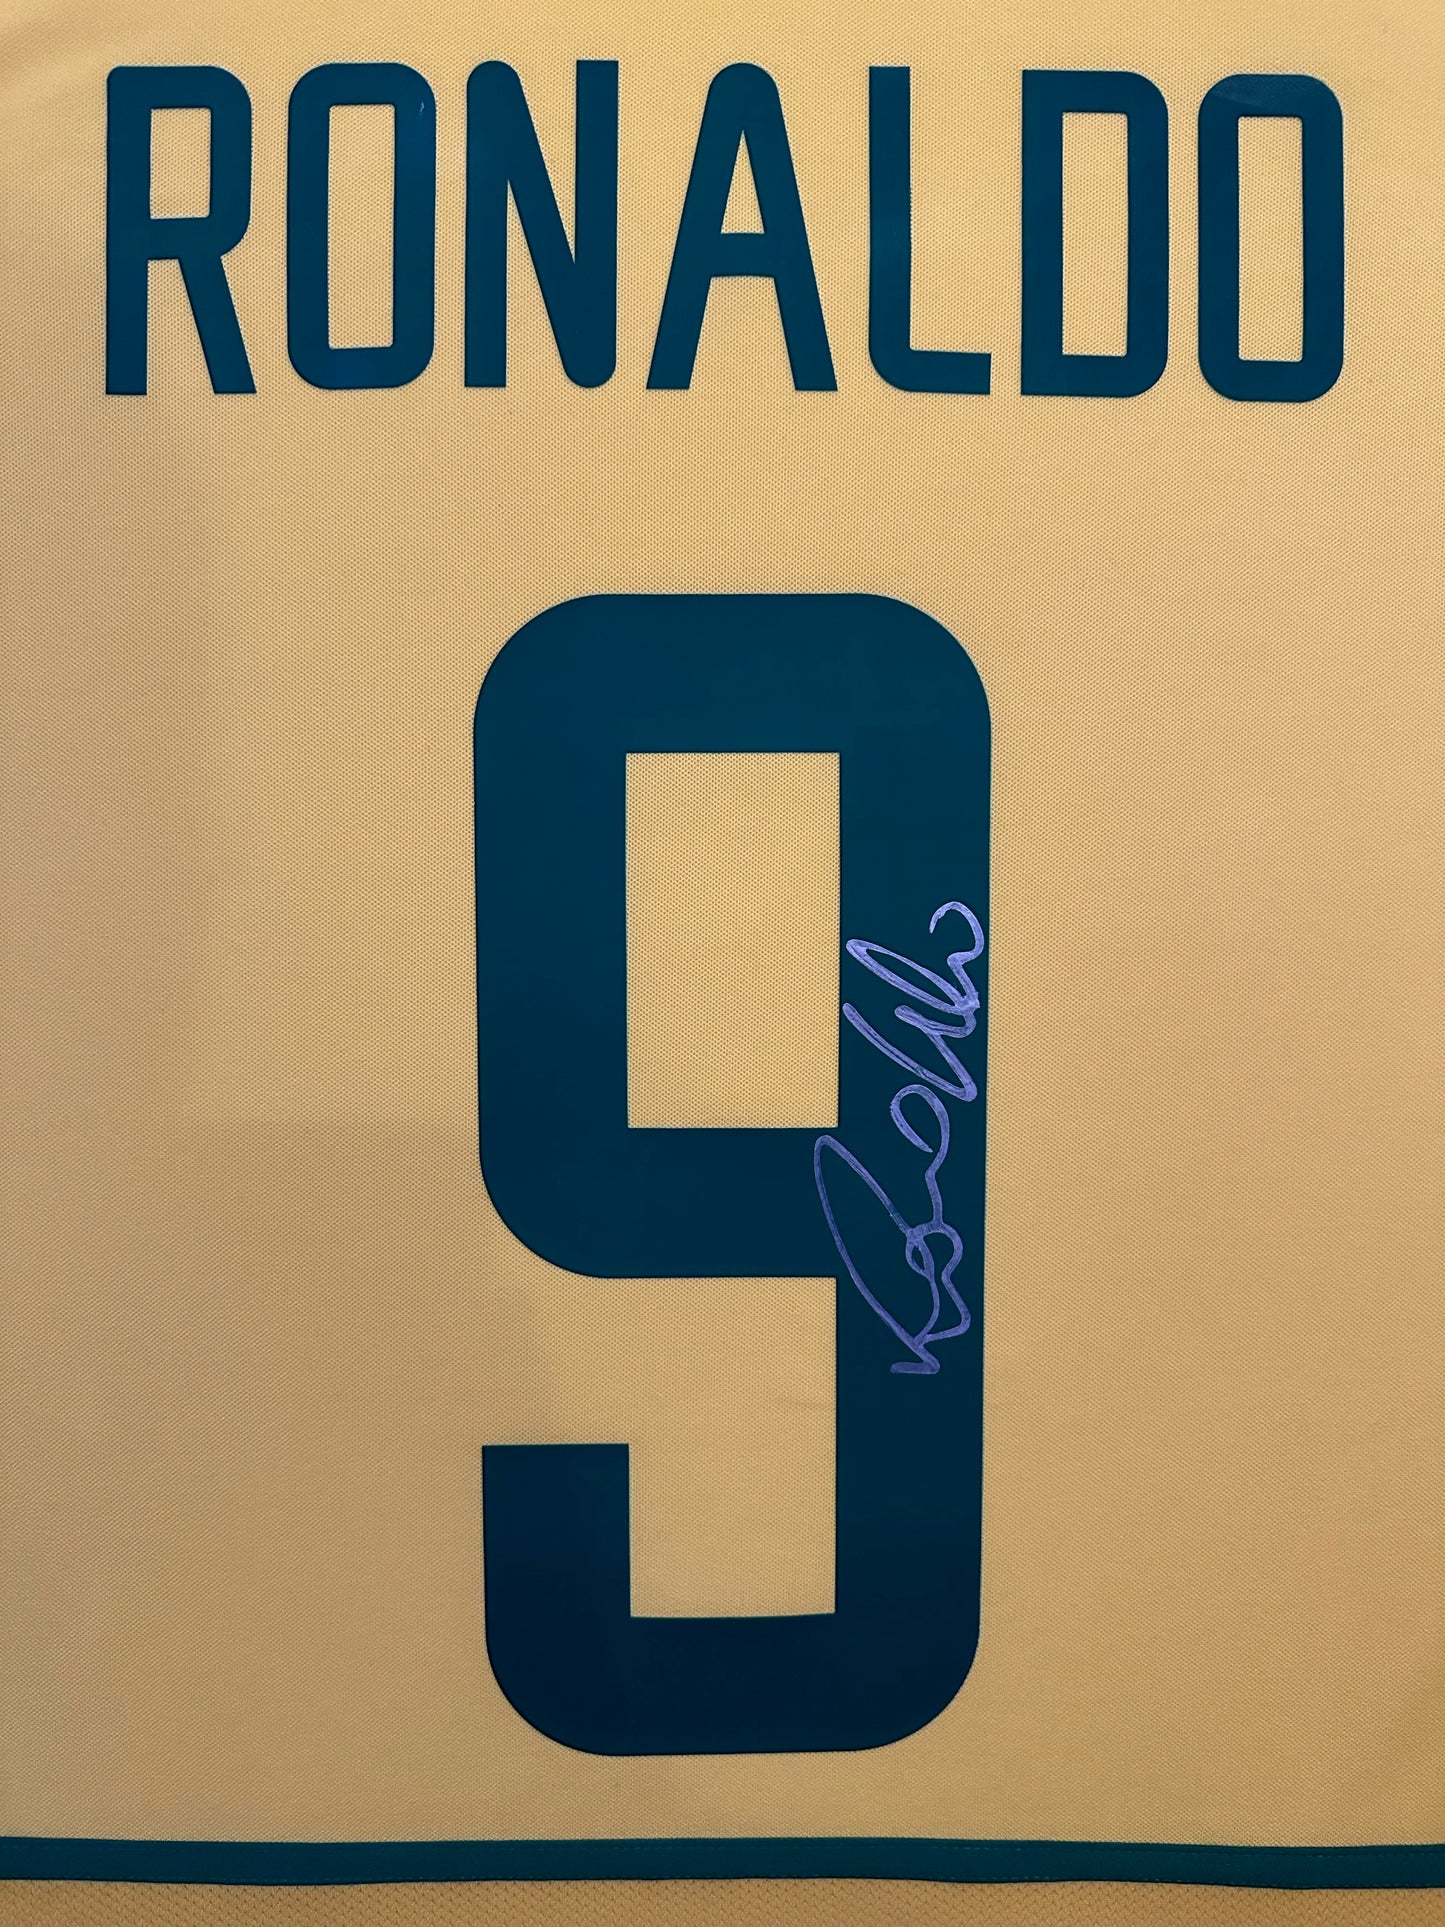 Ronaldo Nazario Brazil 2002 Signed Framed World Cup Home Shirt with COA